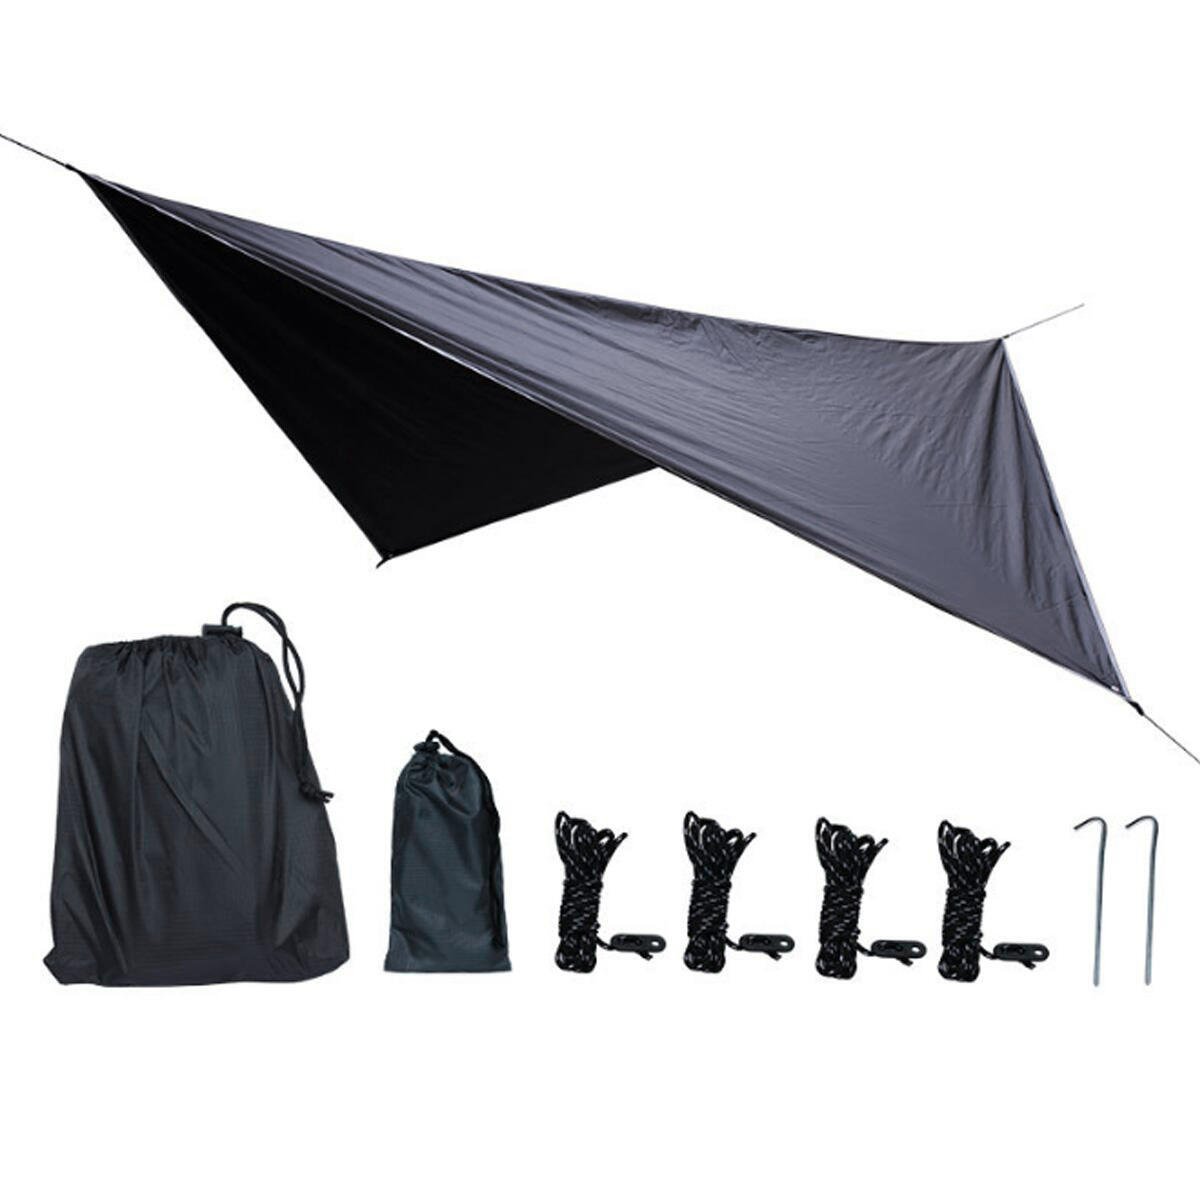 IPRee® 8pcs/set Outdoor Kepeak Tent Tarp Camping Hammock Tent Anit-UV Moisture-proof Awning Sun Shade Rain Shelter Waterproof